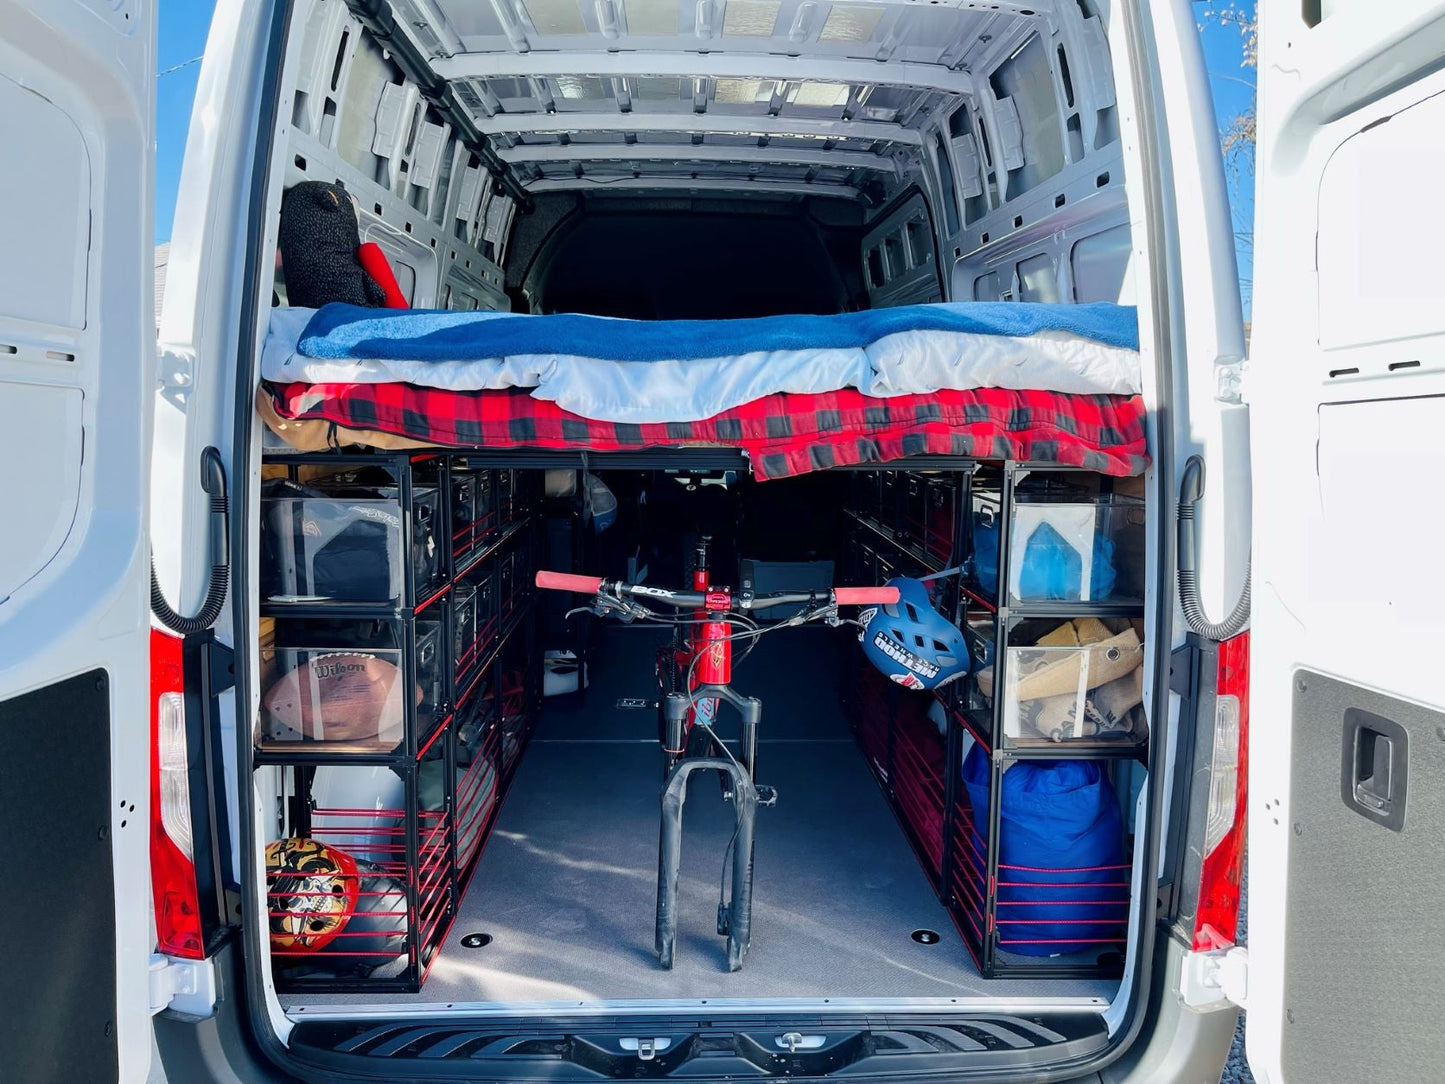 Mercedes Sprinter 144 Camper Van Conversion Kit Mountain Bike Under Bed In Aisle - Back